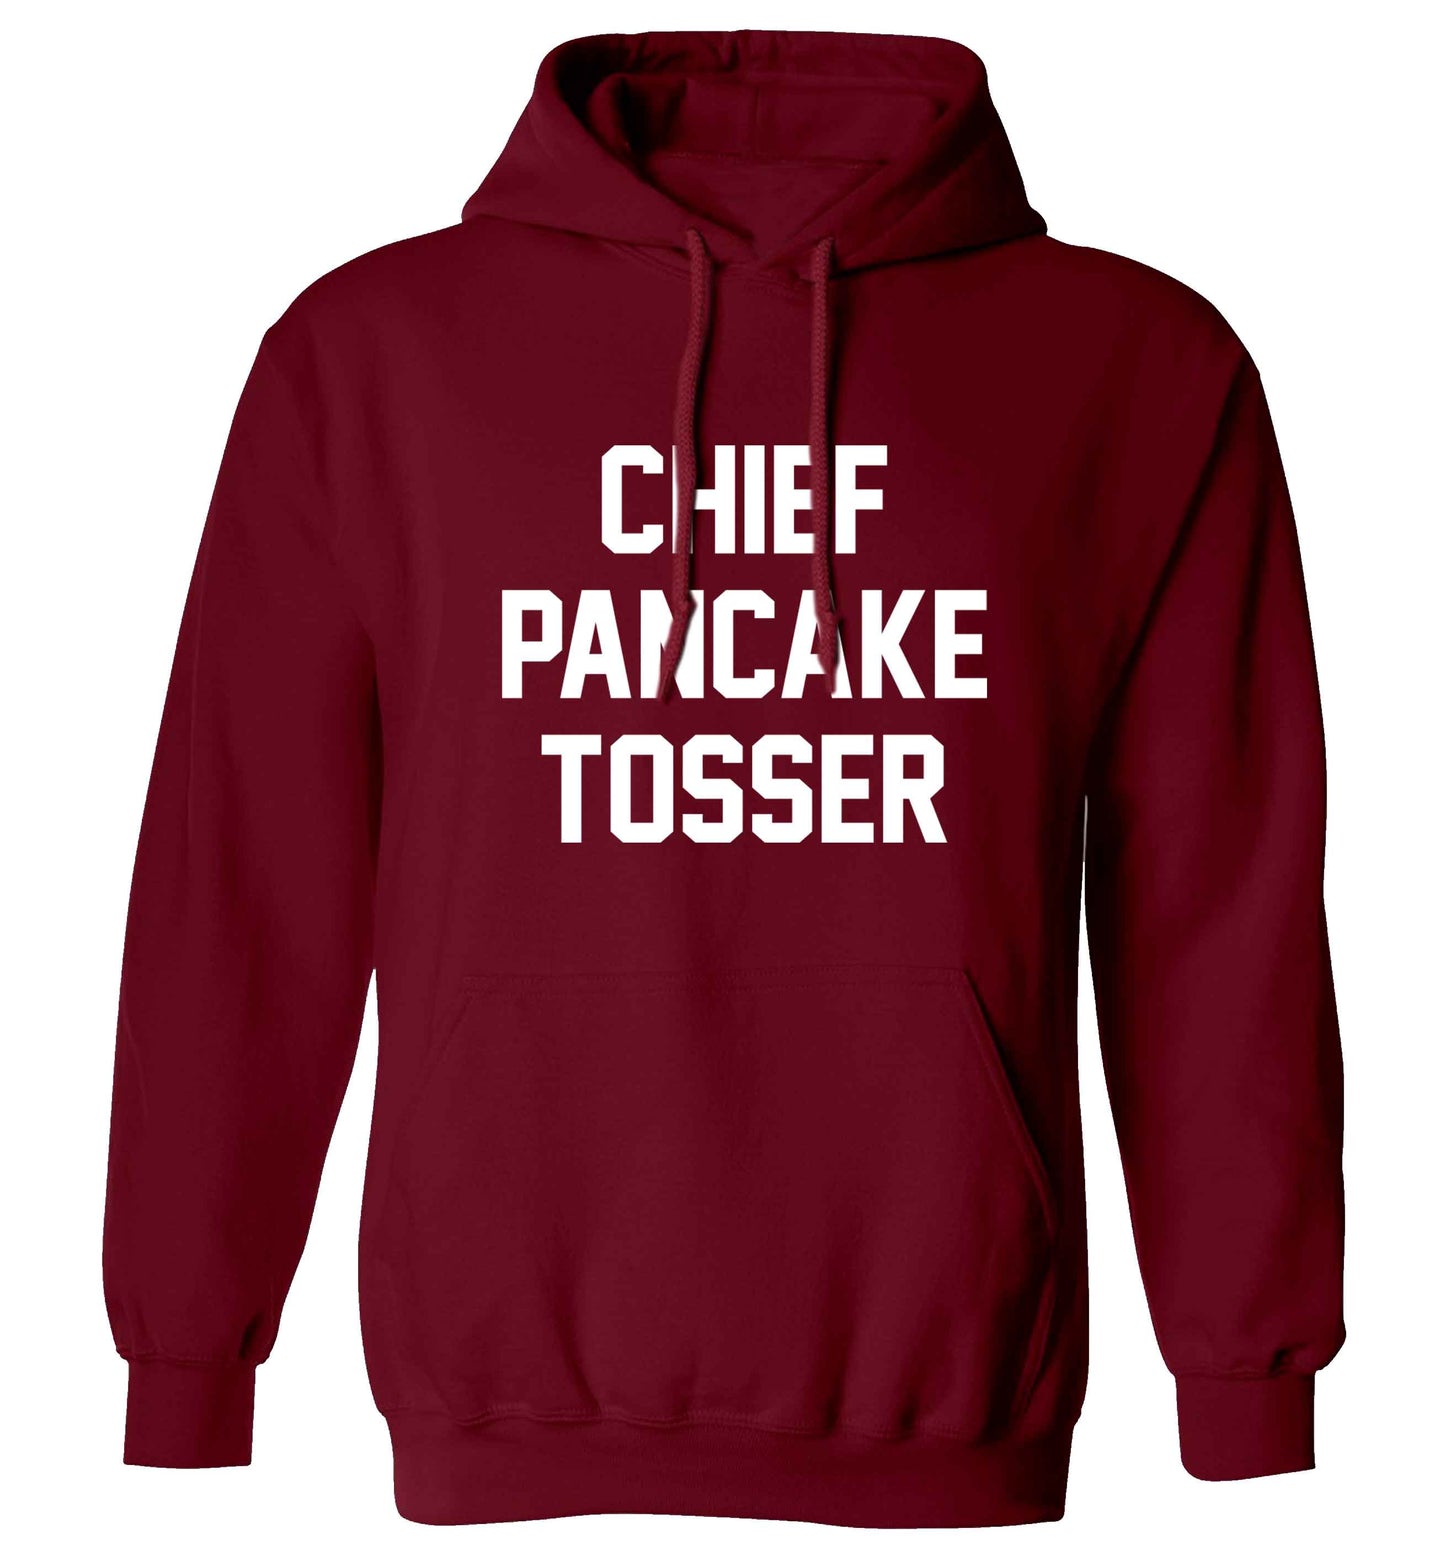 Chief pancake tosser adults unisex maroon hoodie 2XL